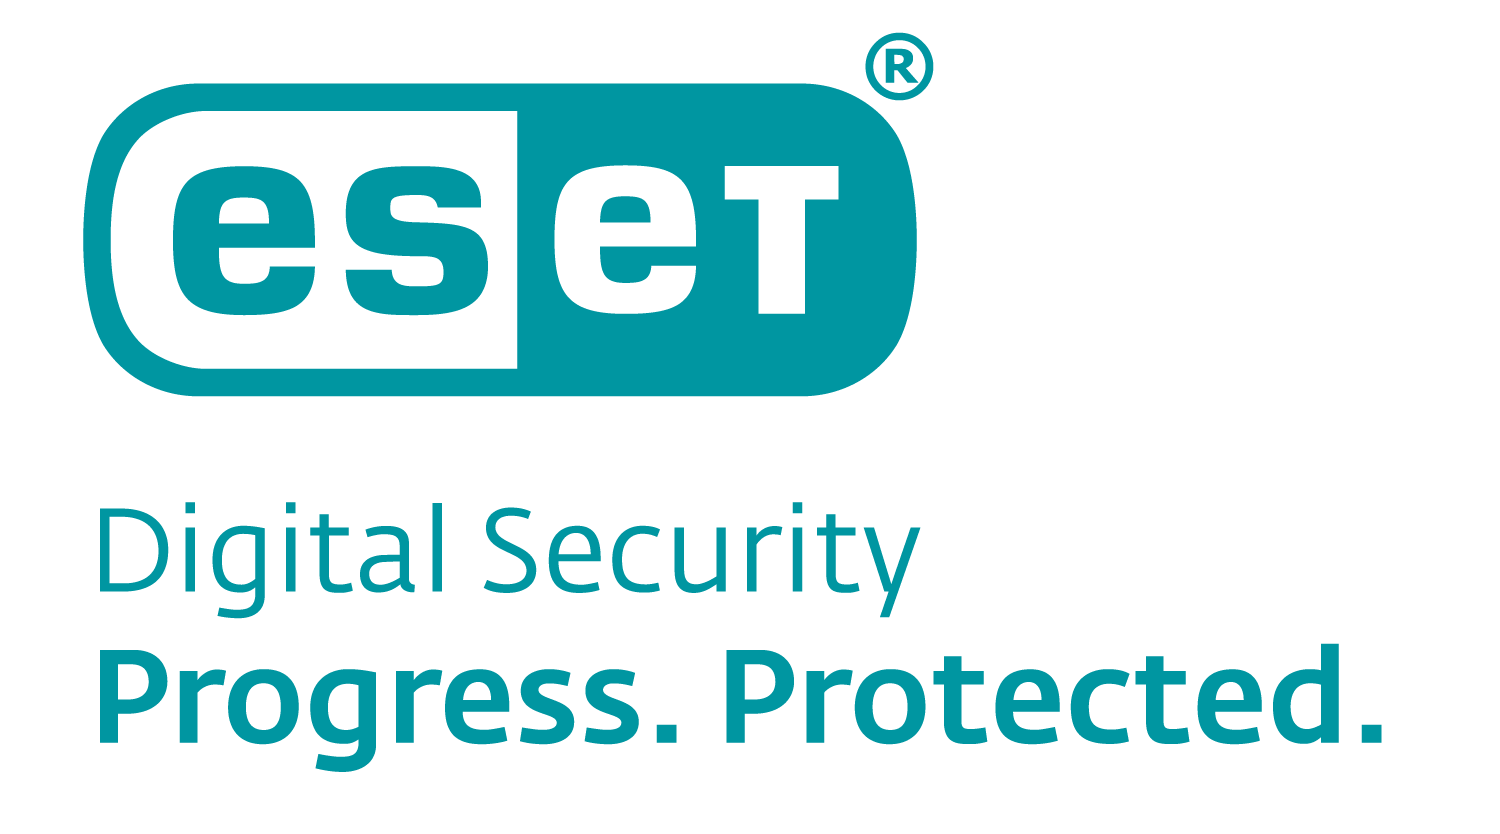 ESET Cyber Security Logo